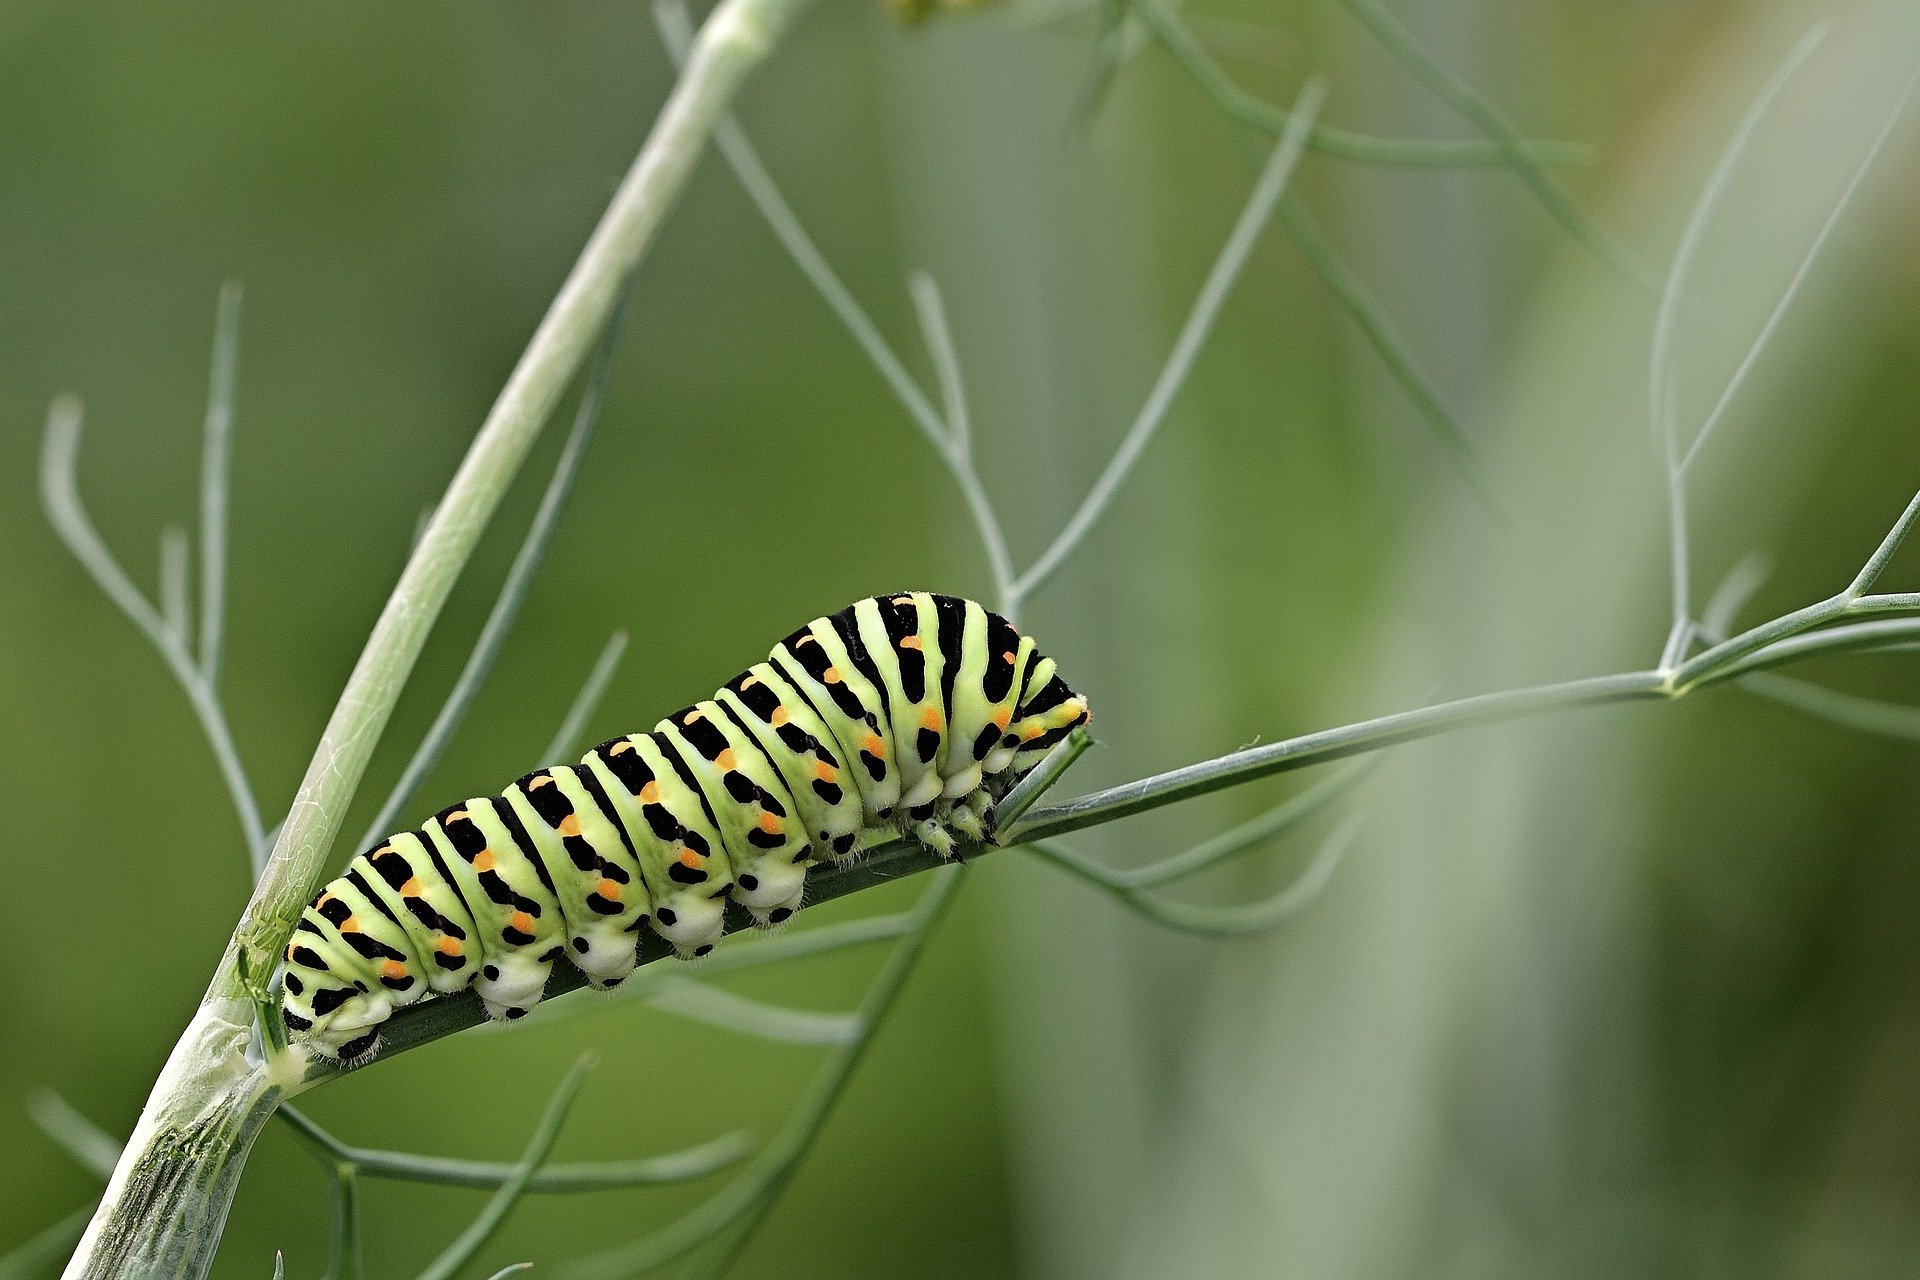 Later another caterpillar fell! | Photo: PIxabay/ jggrz 